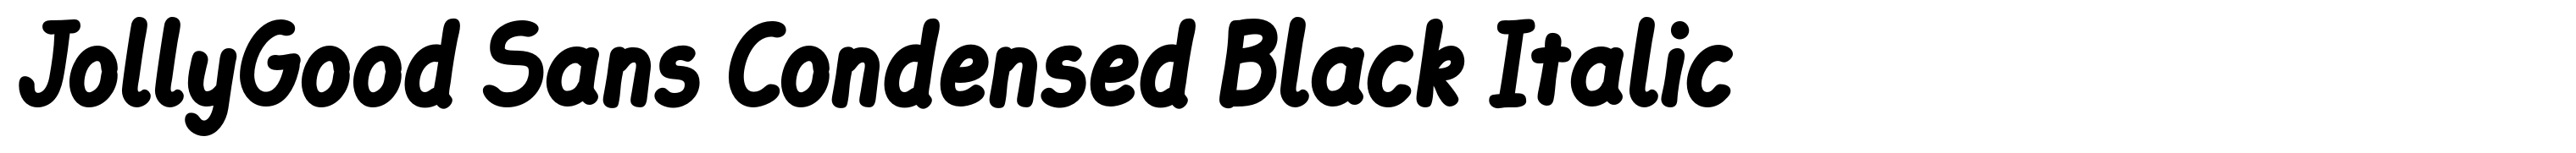 JollyGood Sans Condensed Black Italic